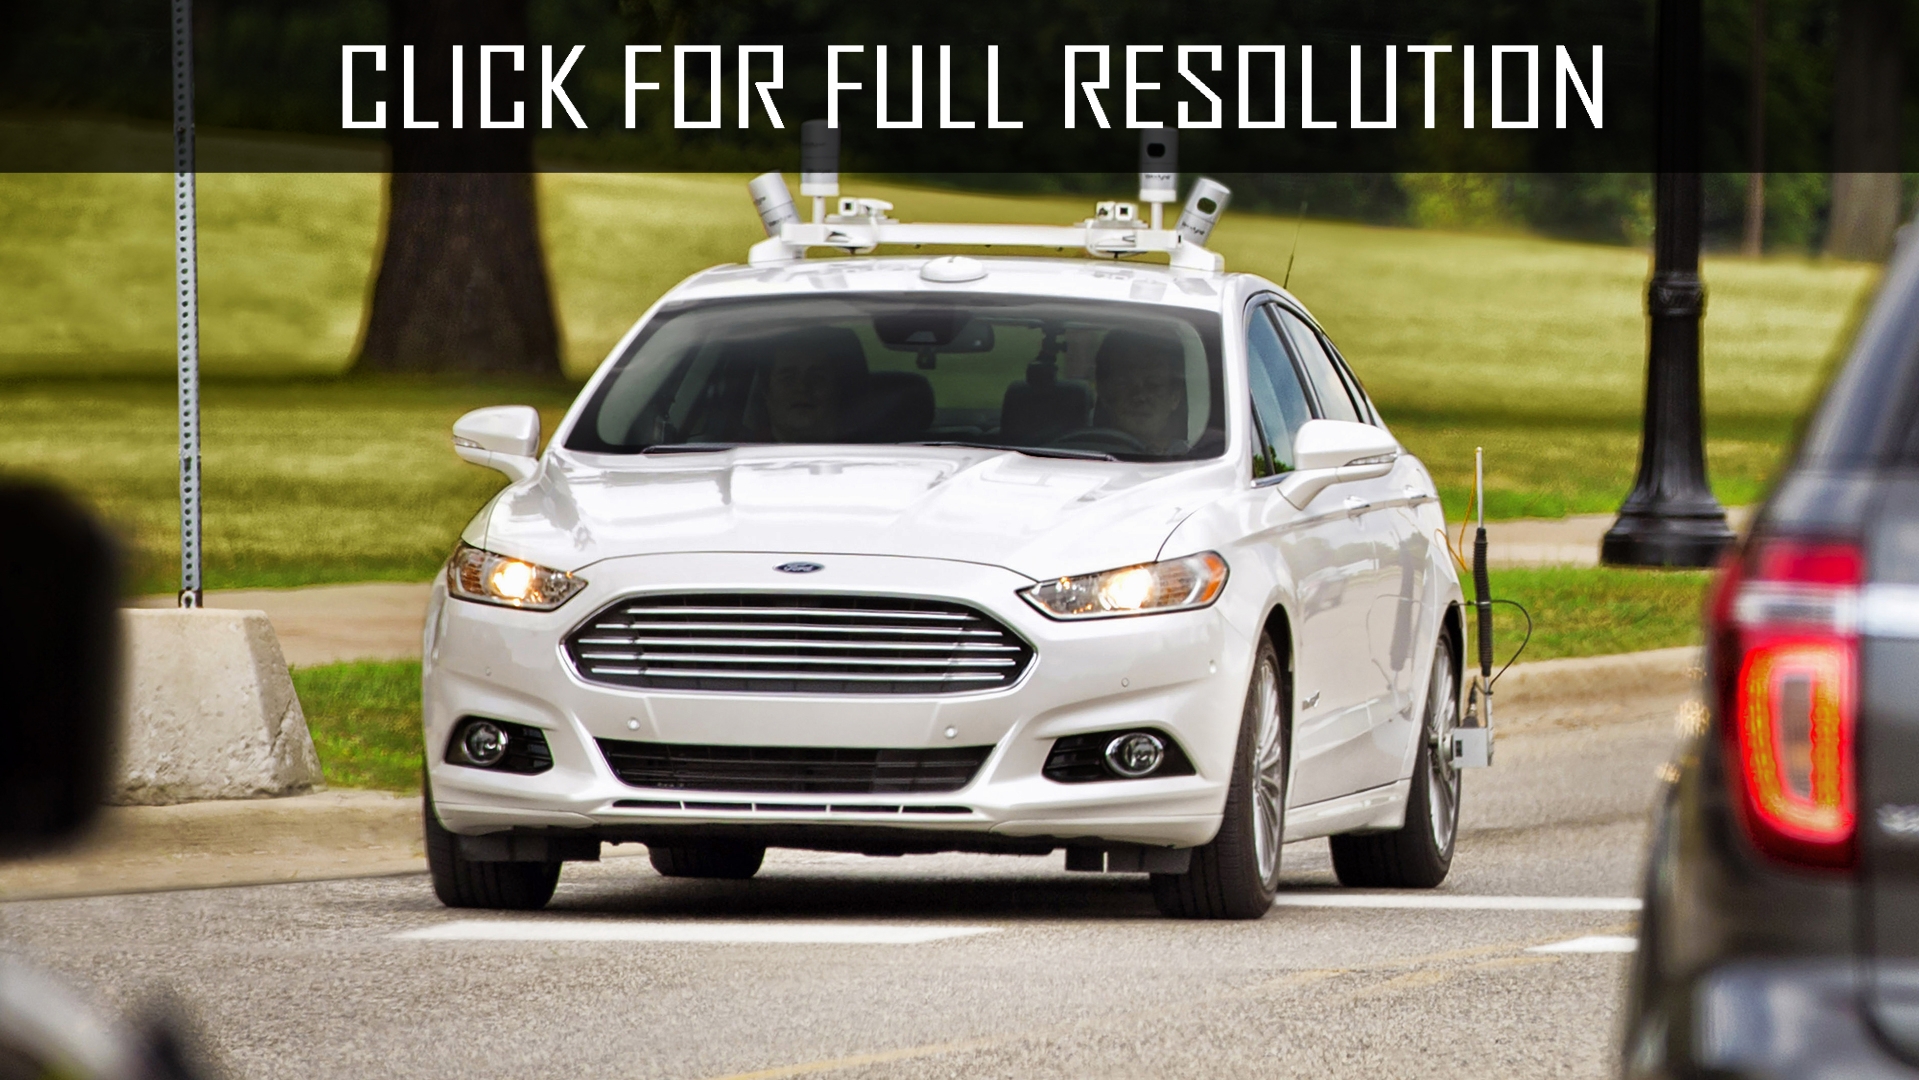 Ford fully autonomous cars 2025